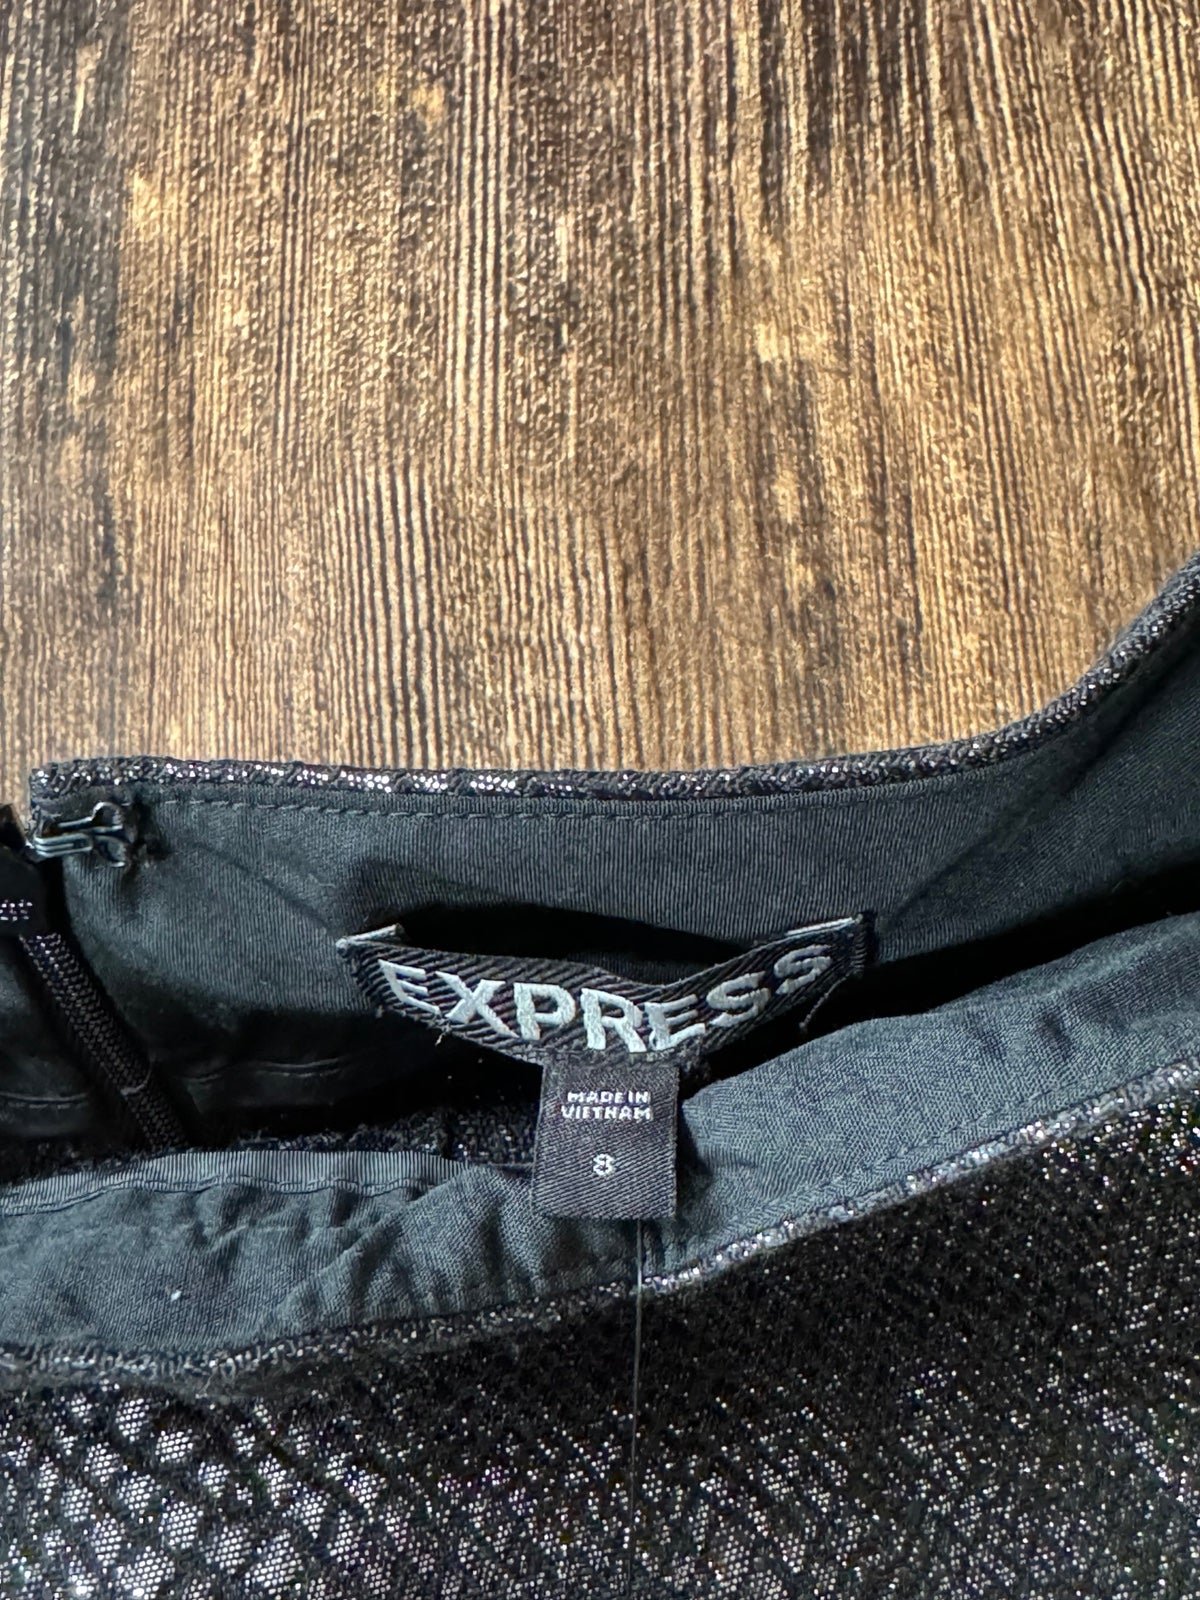 Simple Express Womens 8 Skort Black Silver Snakeskin Skirted Shorts Asymmetrical NWT FZltV4kQ2 Hot Sale